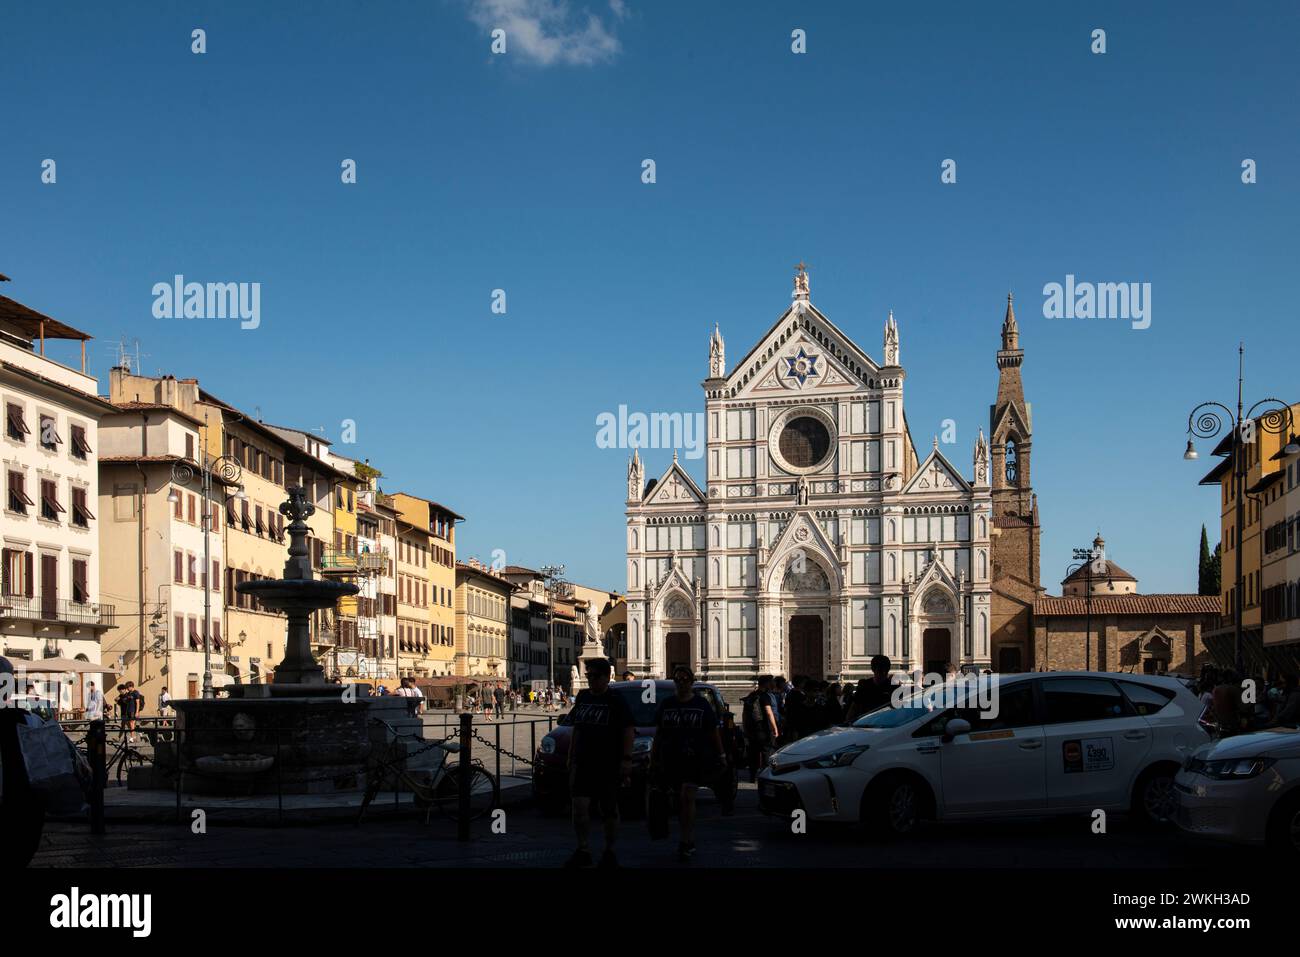 Piazza Santa Croce et la Basilica di Santa Croce, Florence, Italie Banque D'Images